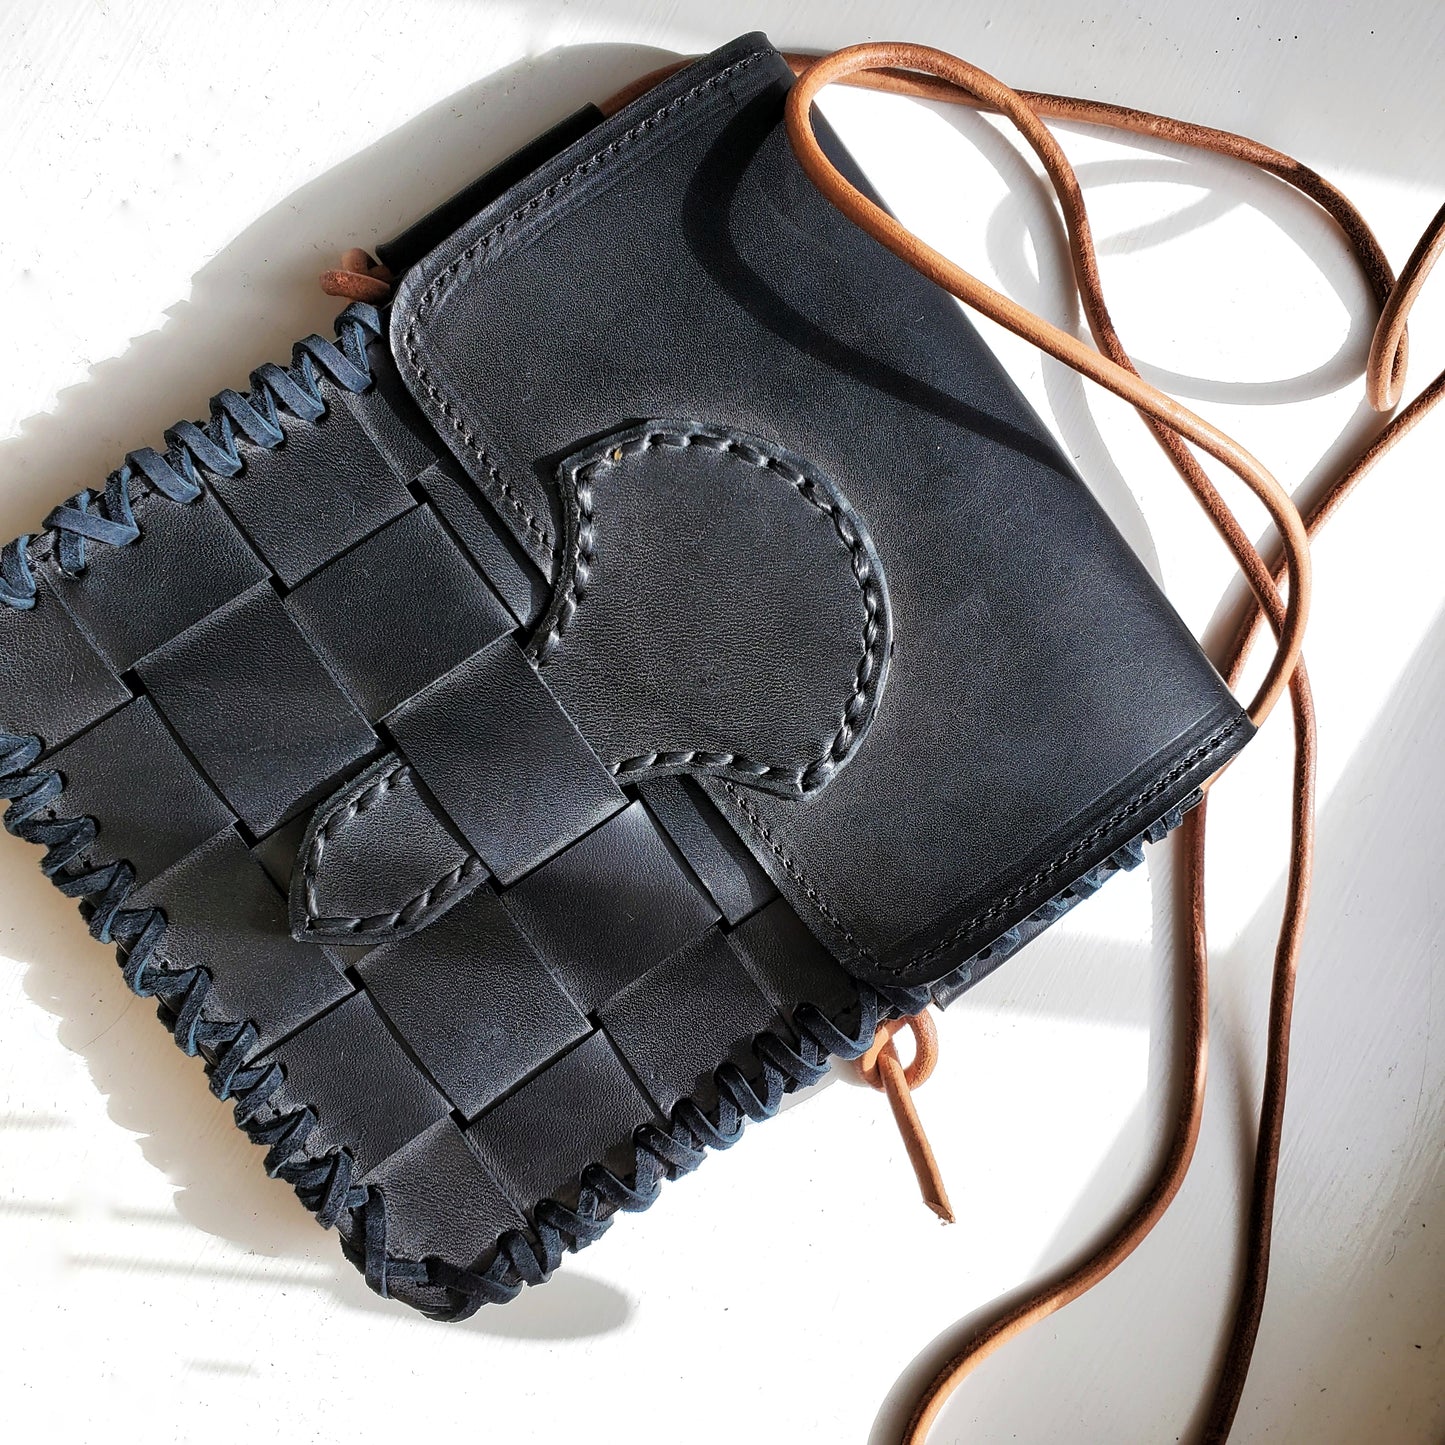 Gefjun woven field purse - black